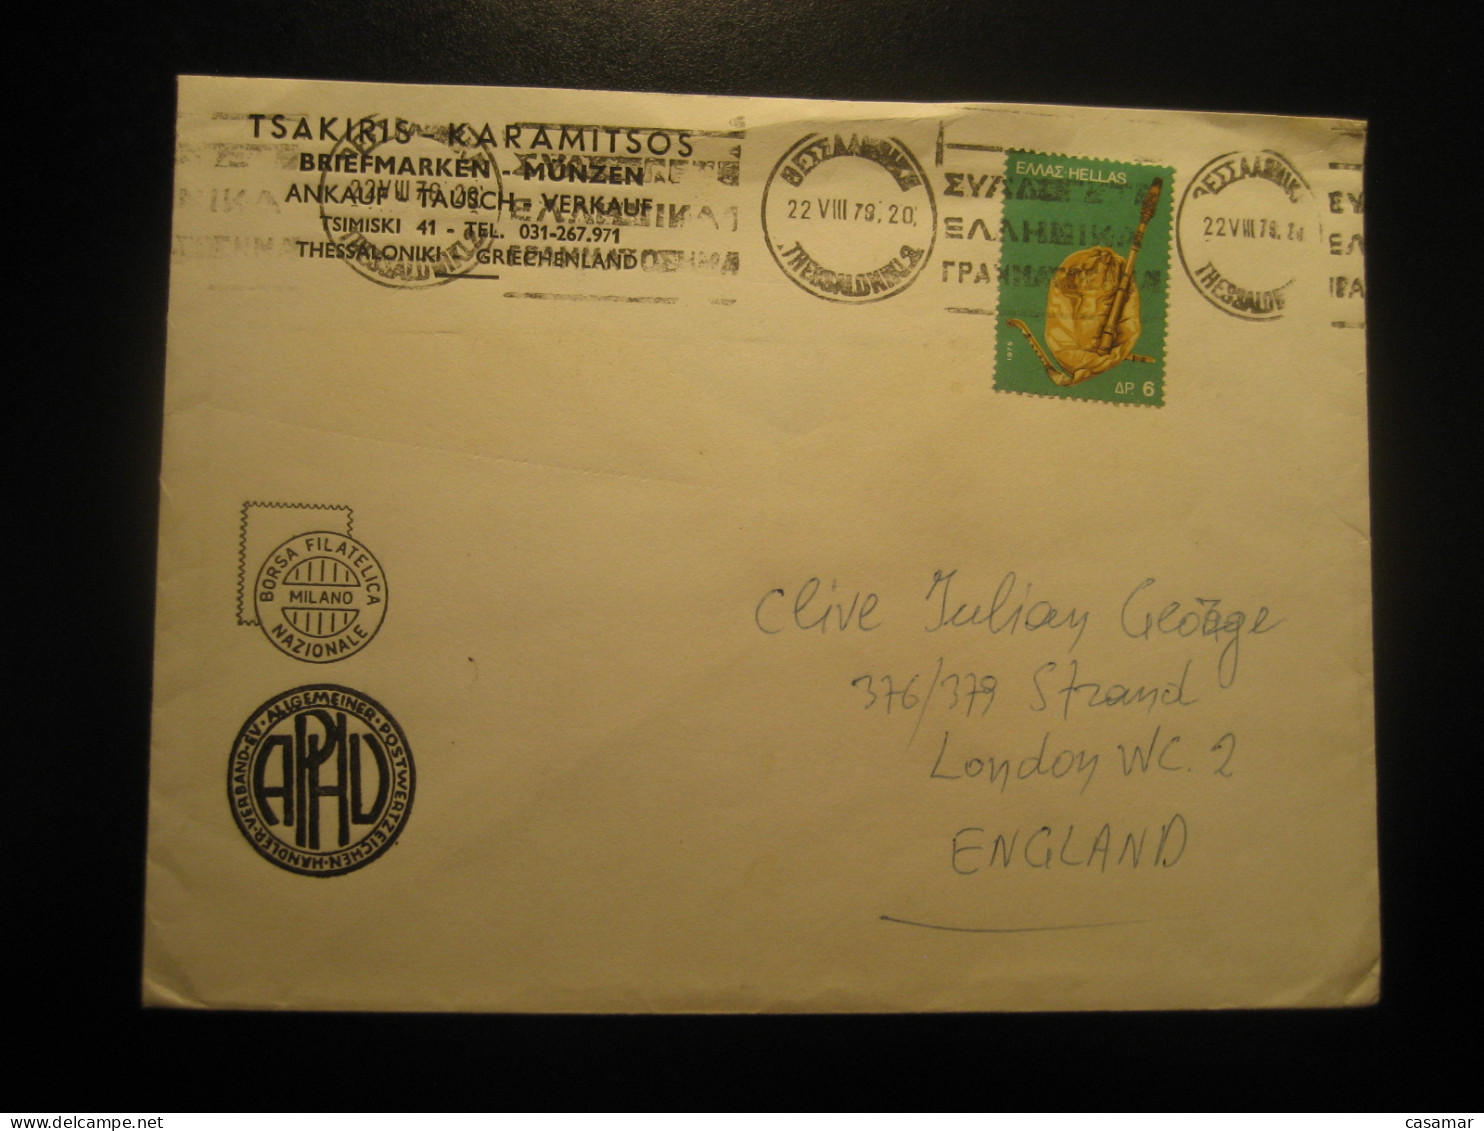 THESSALONIKI 1979 To London England Cancel Cover Stamp GREECE - Briefe U. Dokumente